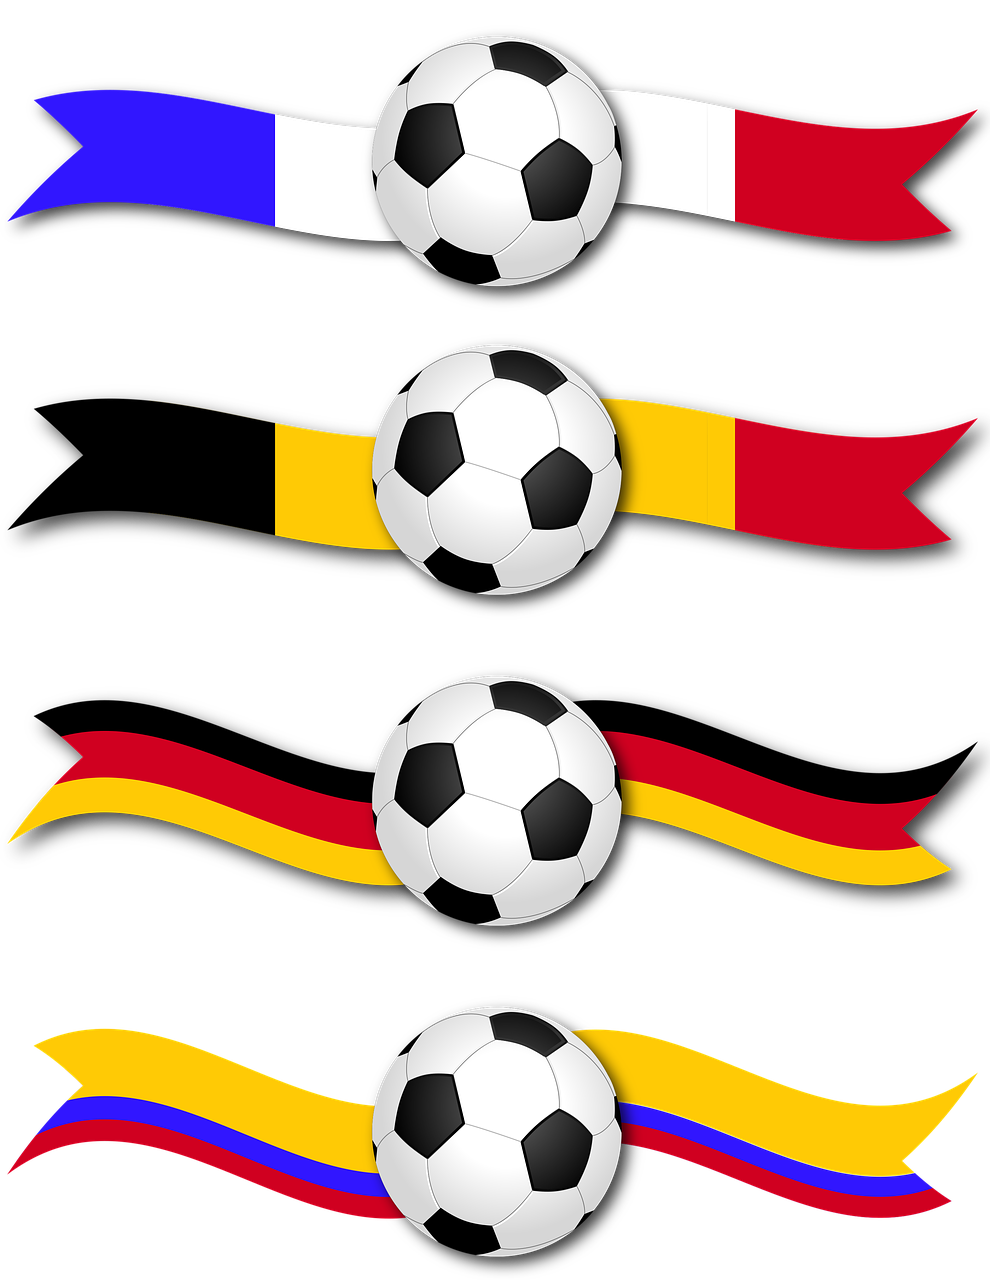 Reklama,  Futbolas,  Futbolas,  Juosta,  Šalis,  France,  Belgija,  Vokietija,  Kolumbija,  Komanda